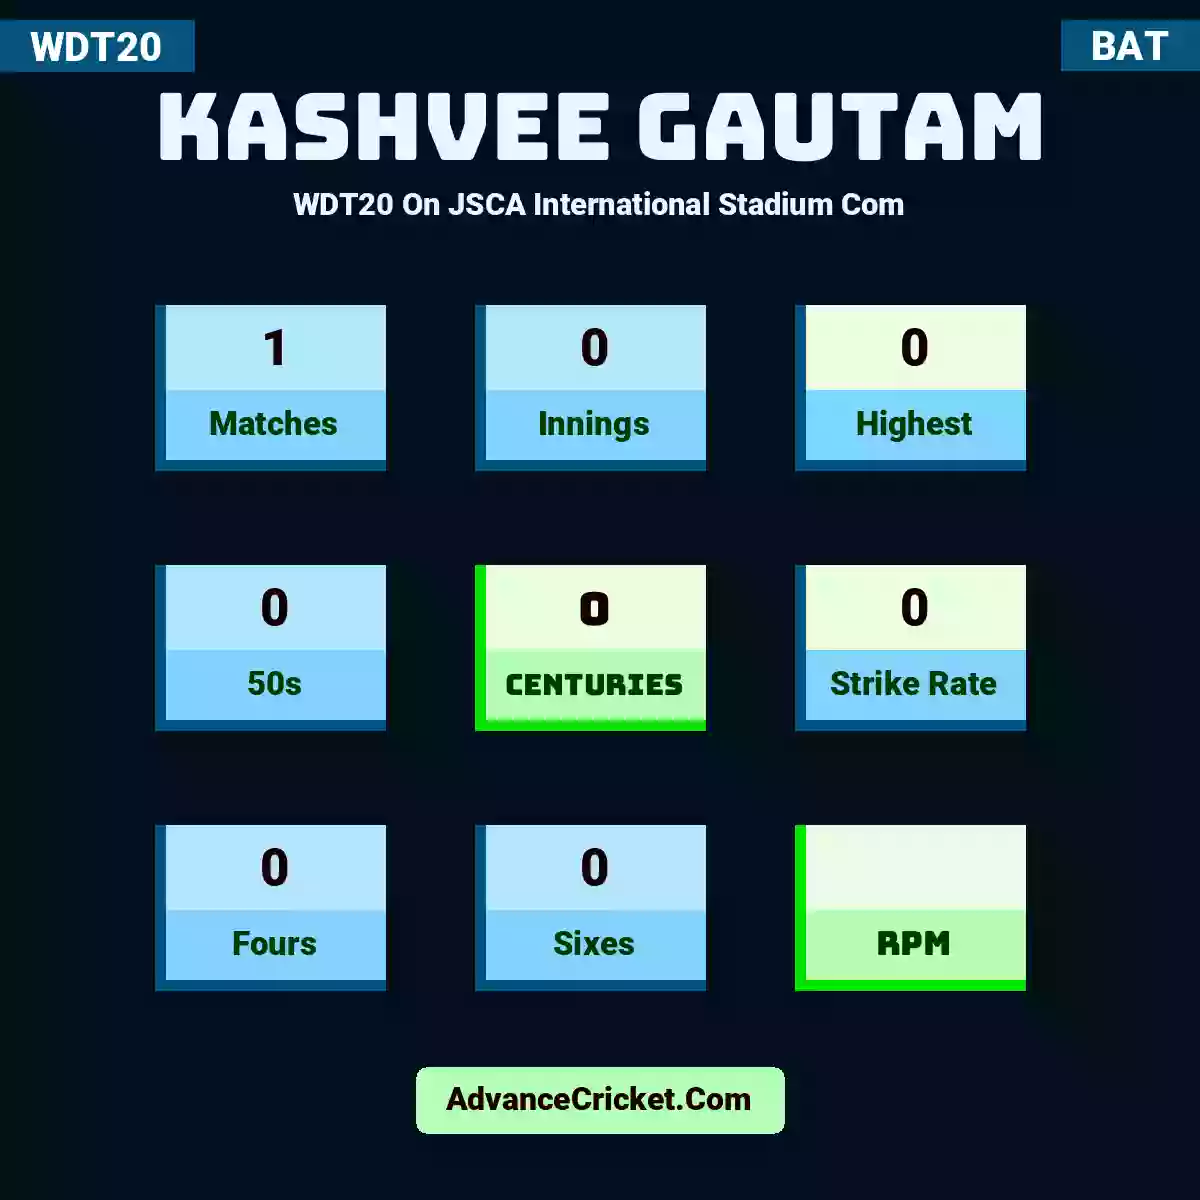 Kashvee Gautam WDT20  On JSCA International Stadium Com, Kashvee Gautam played 1 matches, scored 0 runs as highest, 0 half-centuries, and 0 centuries, with a strike rate of 0. K.Gautam hit 0 fours and 0 sixes.